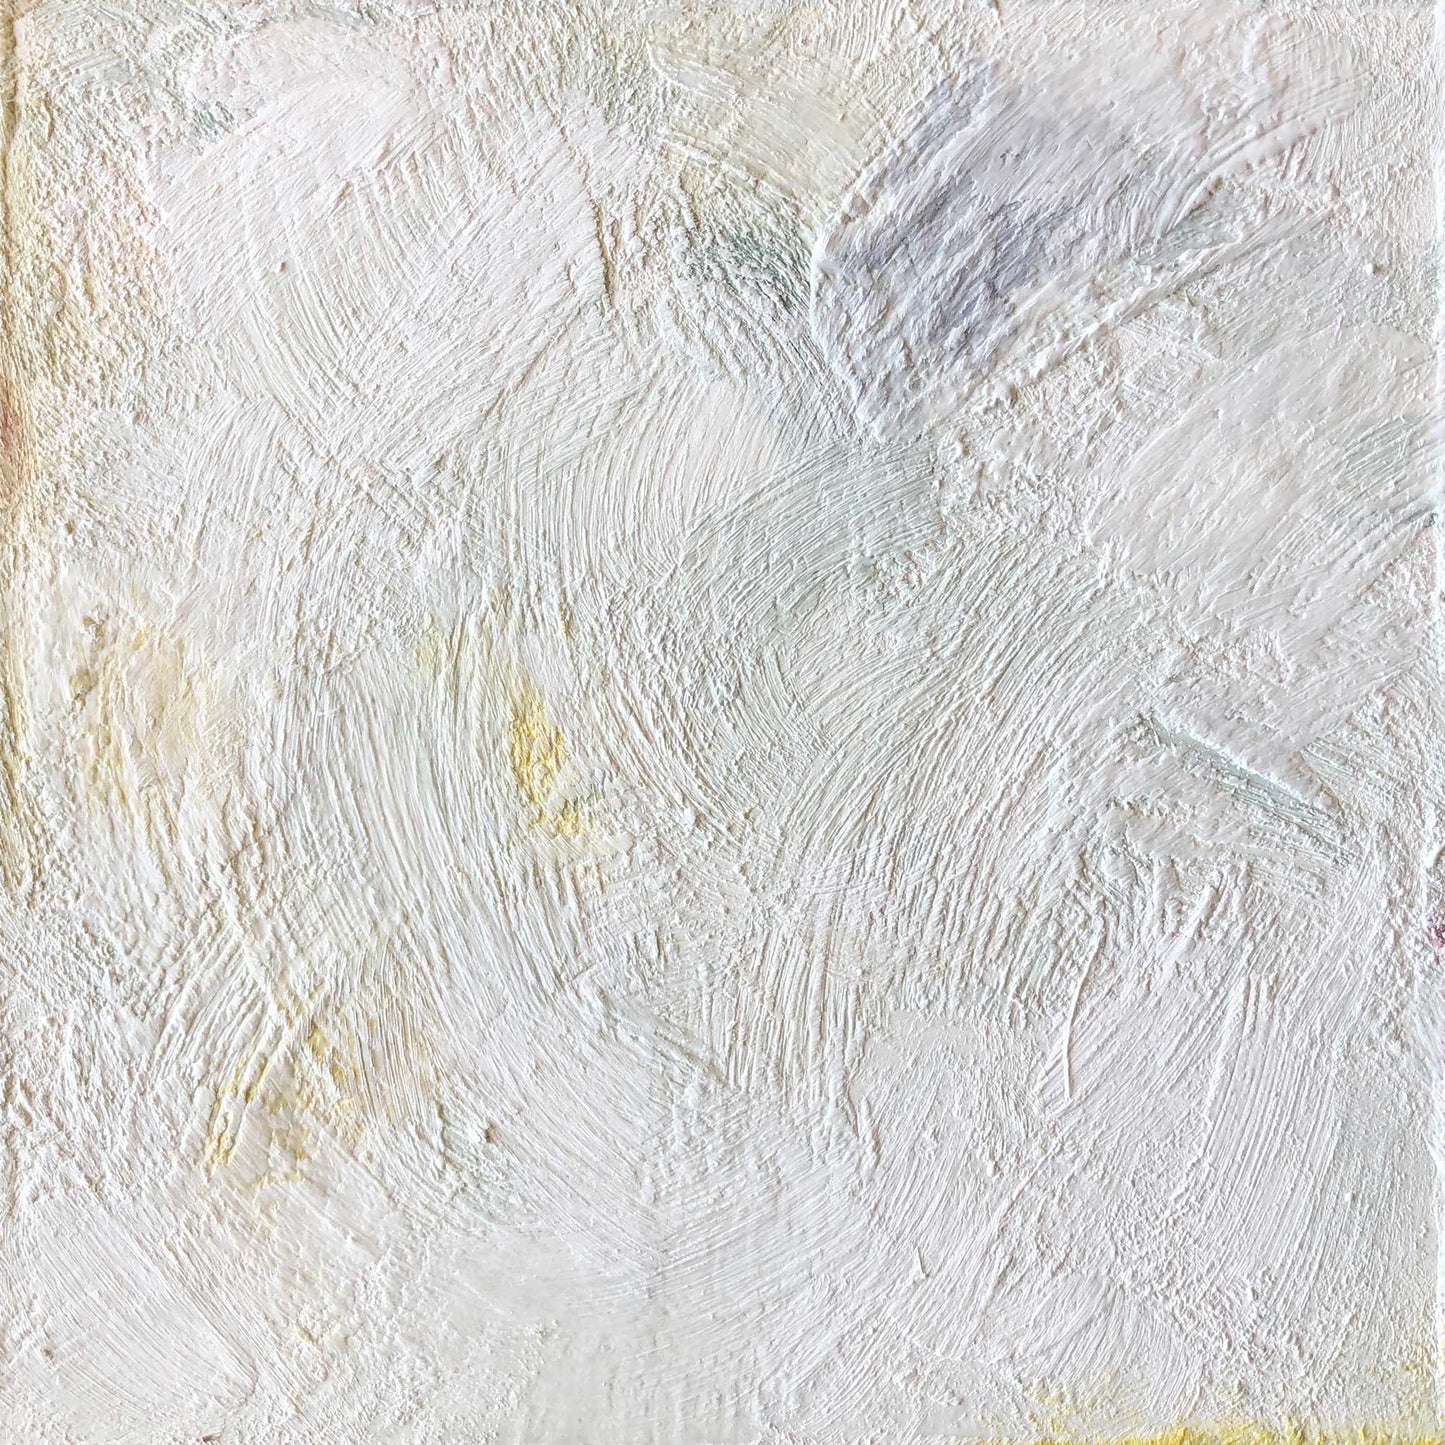 ENW-NB-014 "New Beginning" #14 (8x8x.875) Original encaustic abstract painting by Chizu Omori Art